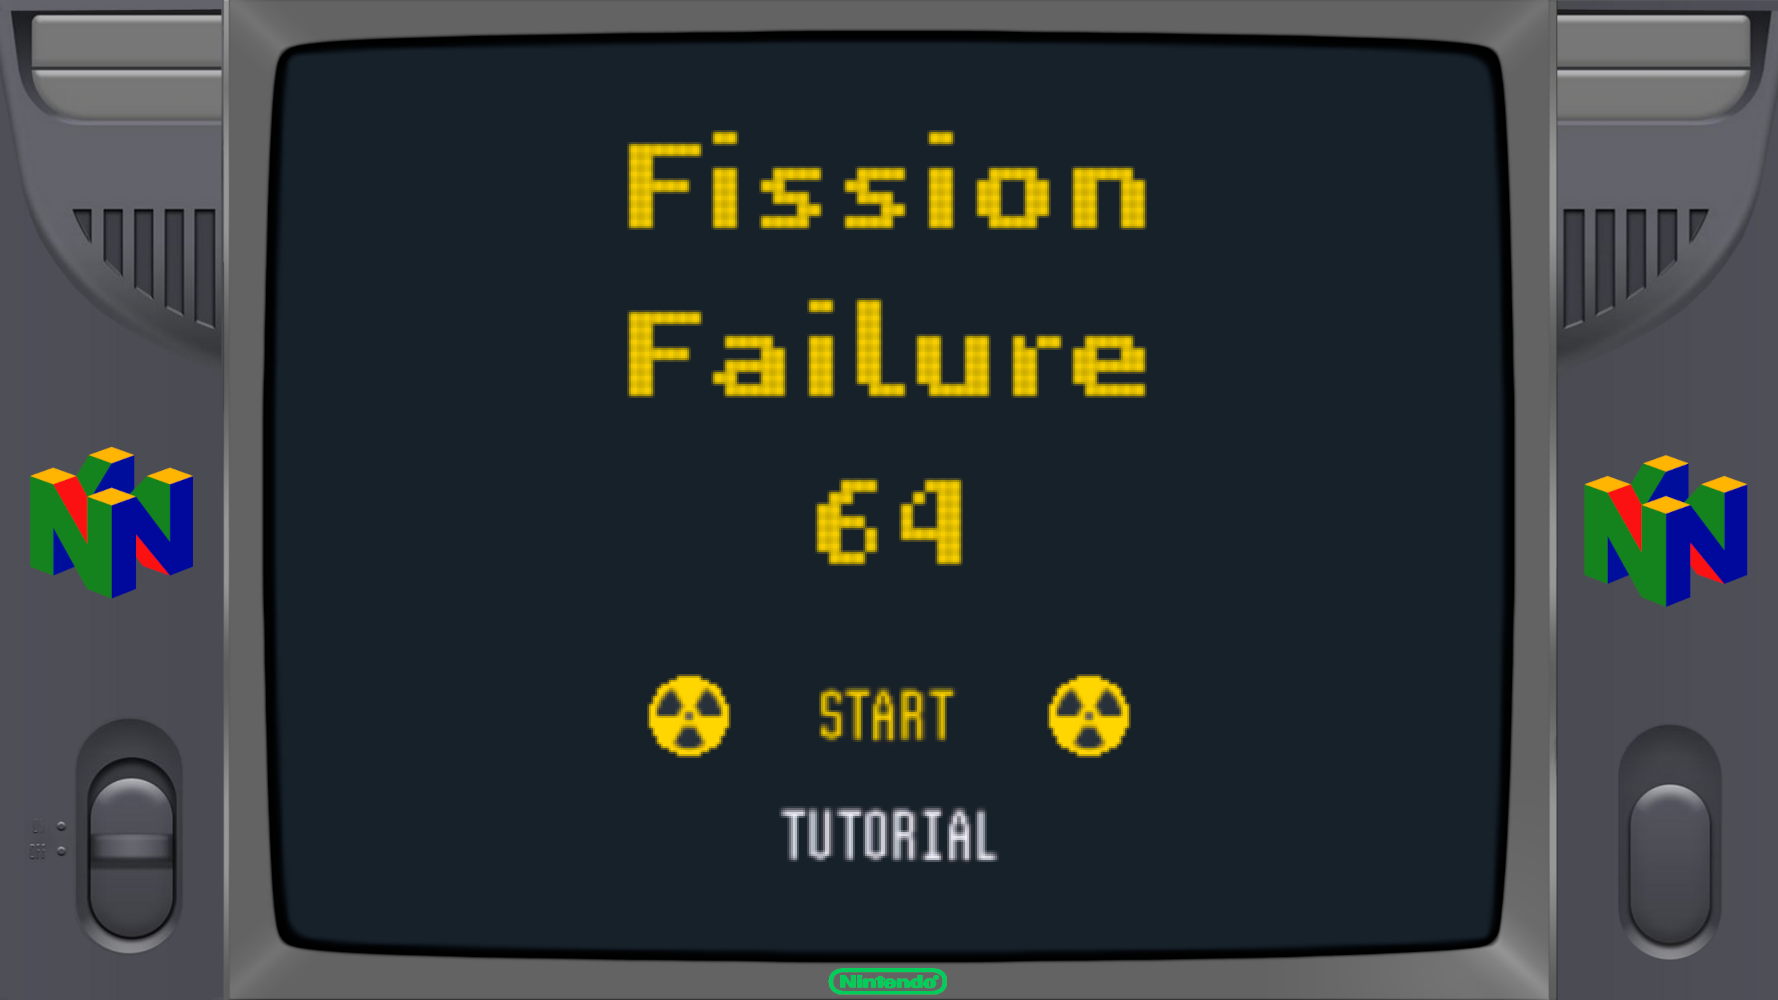 Fission Failure 64